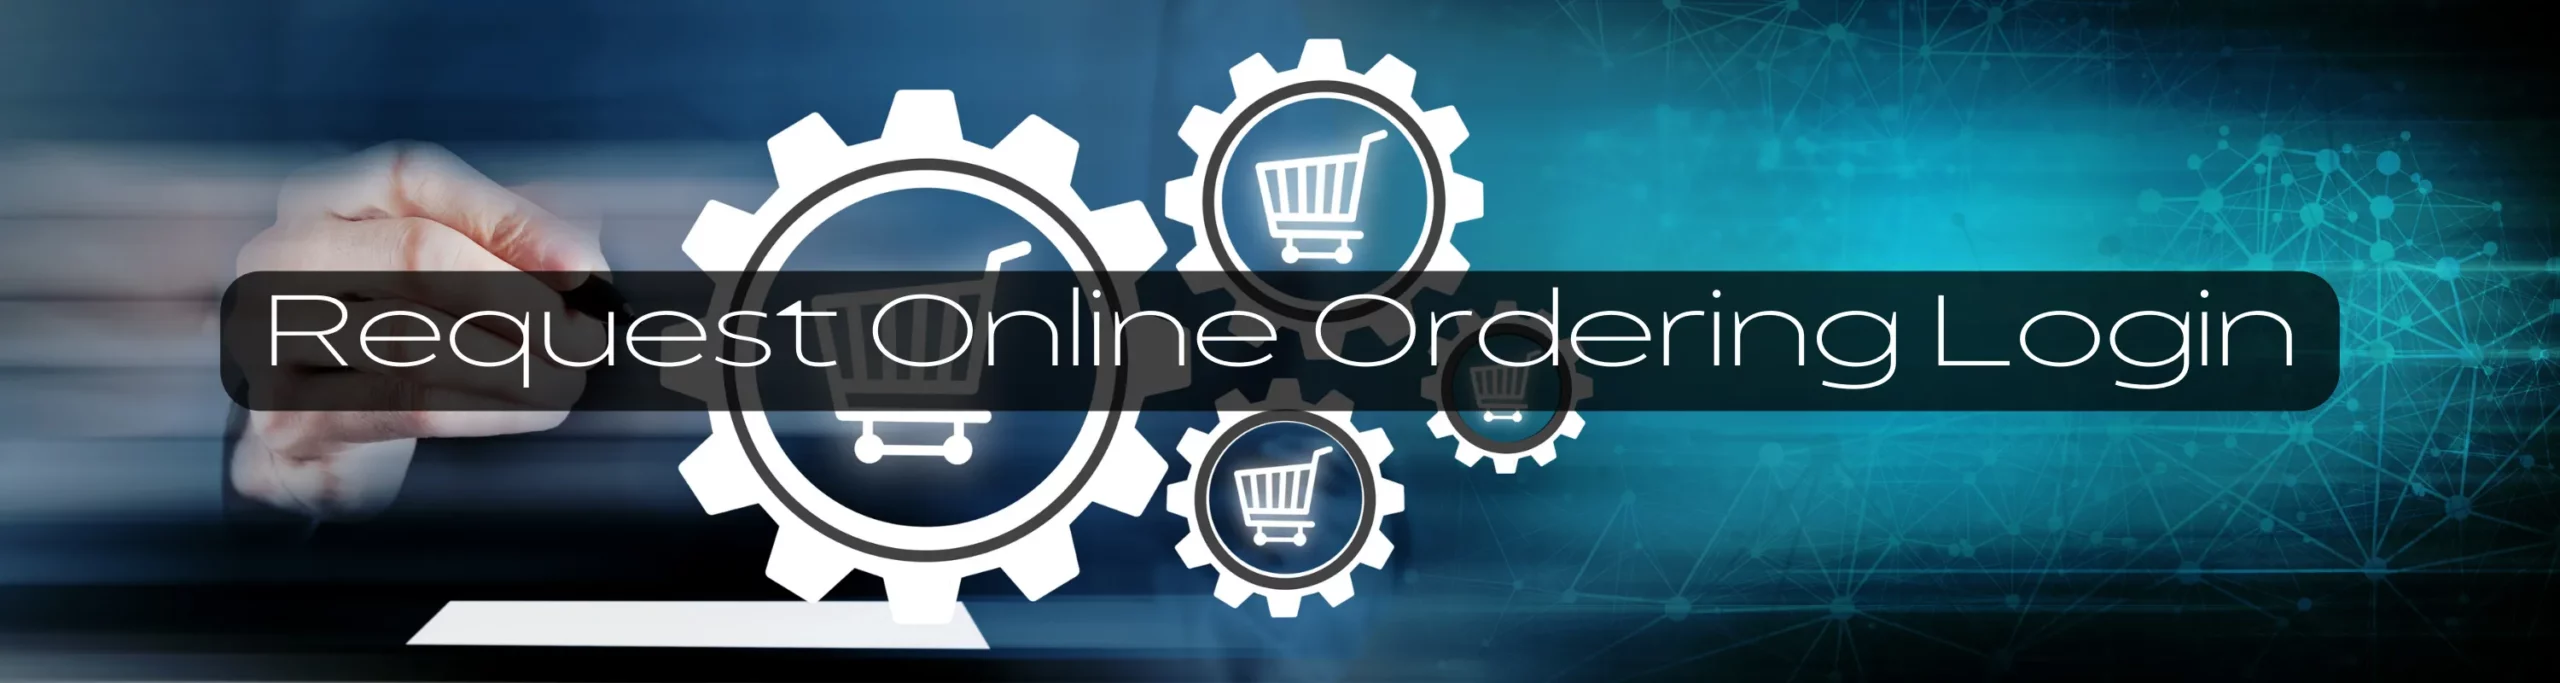 Online Ordering Request Banner